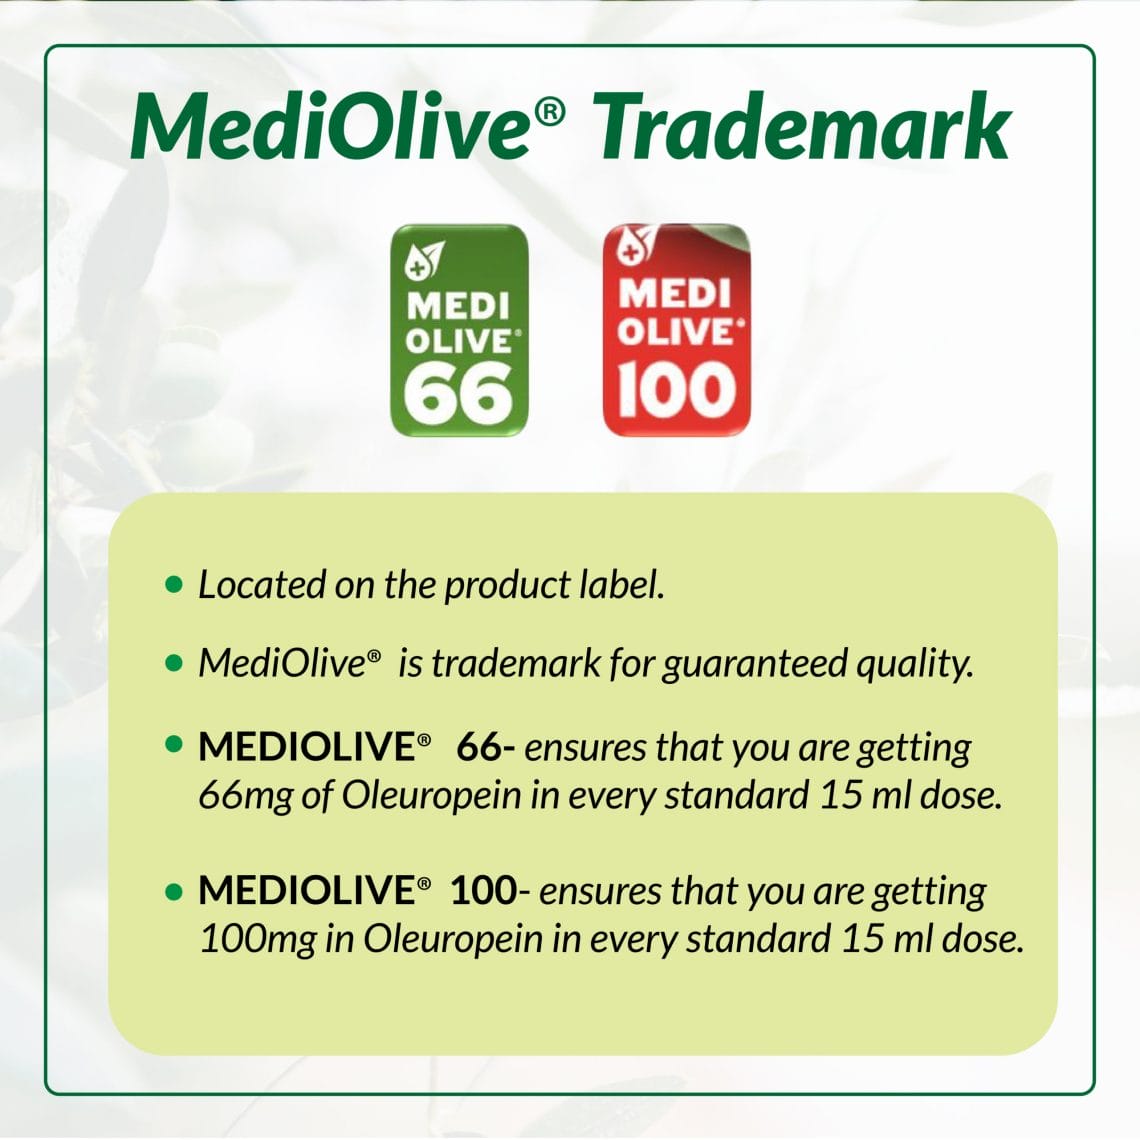 Mediolive trademark - 4